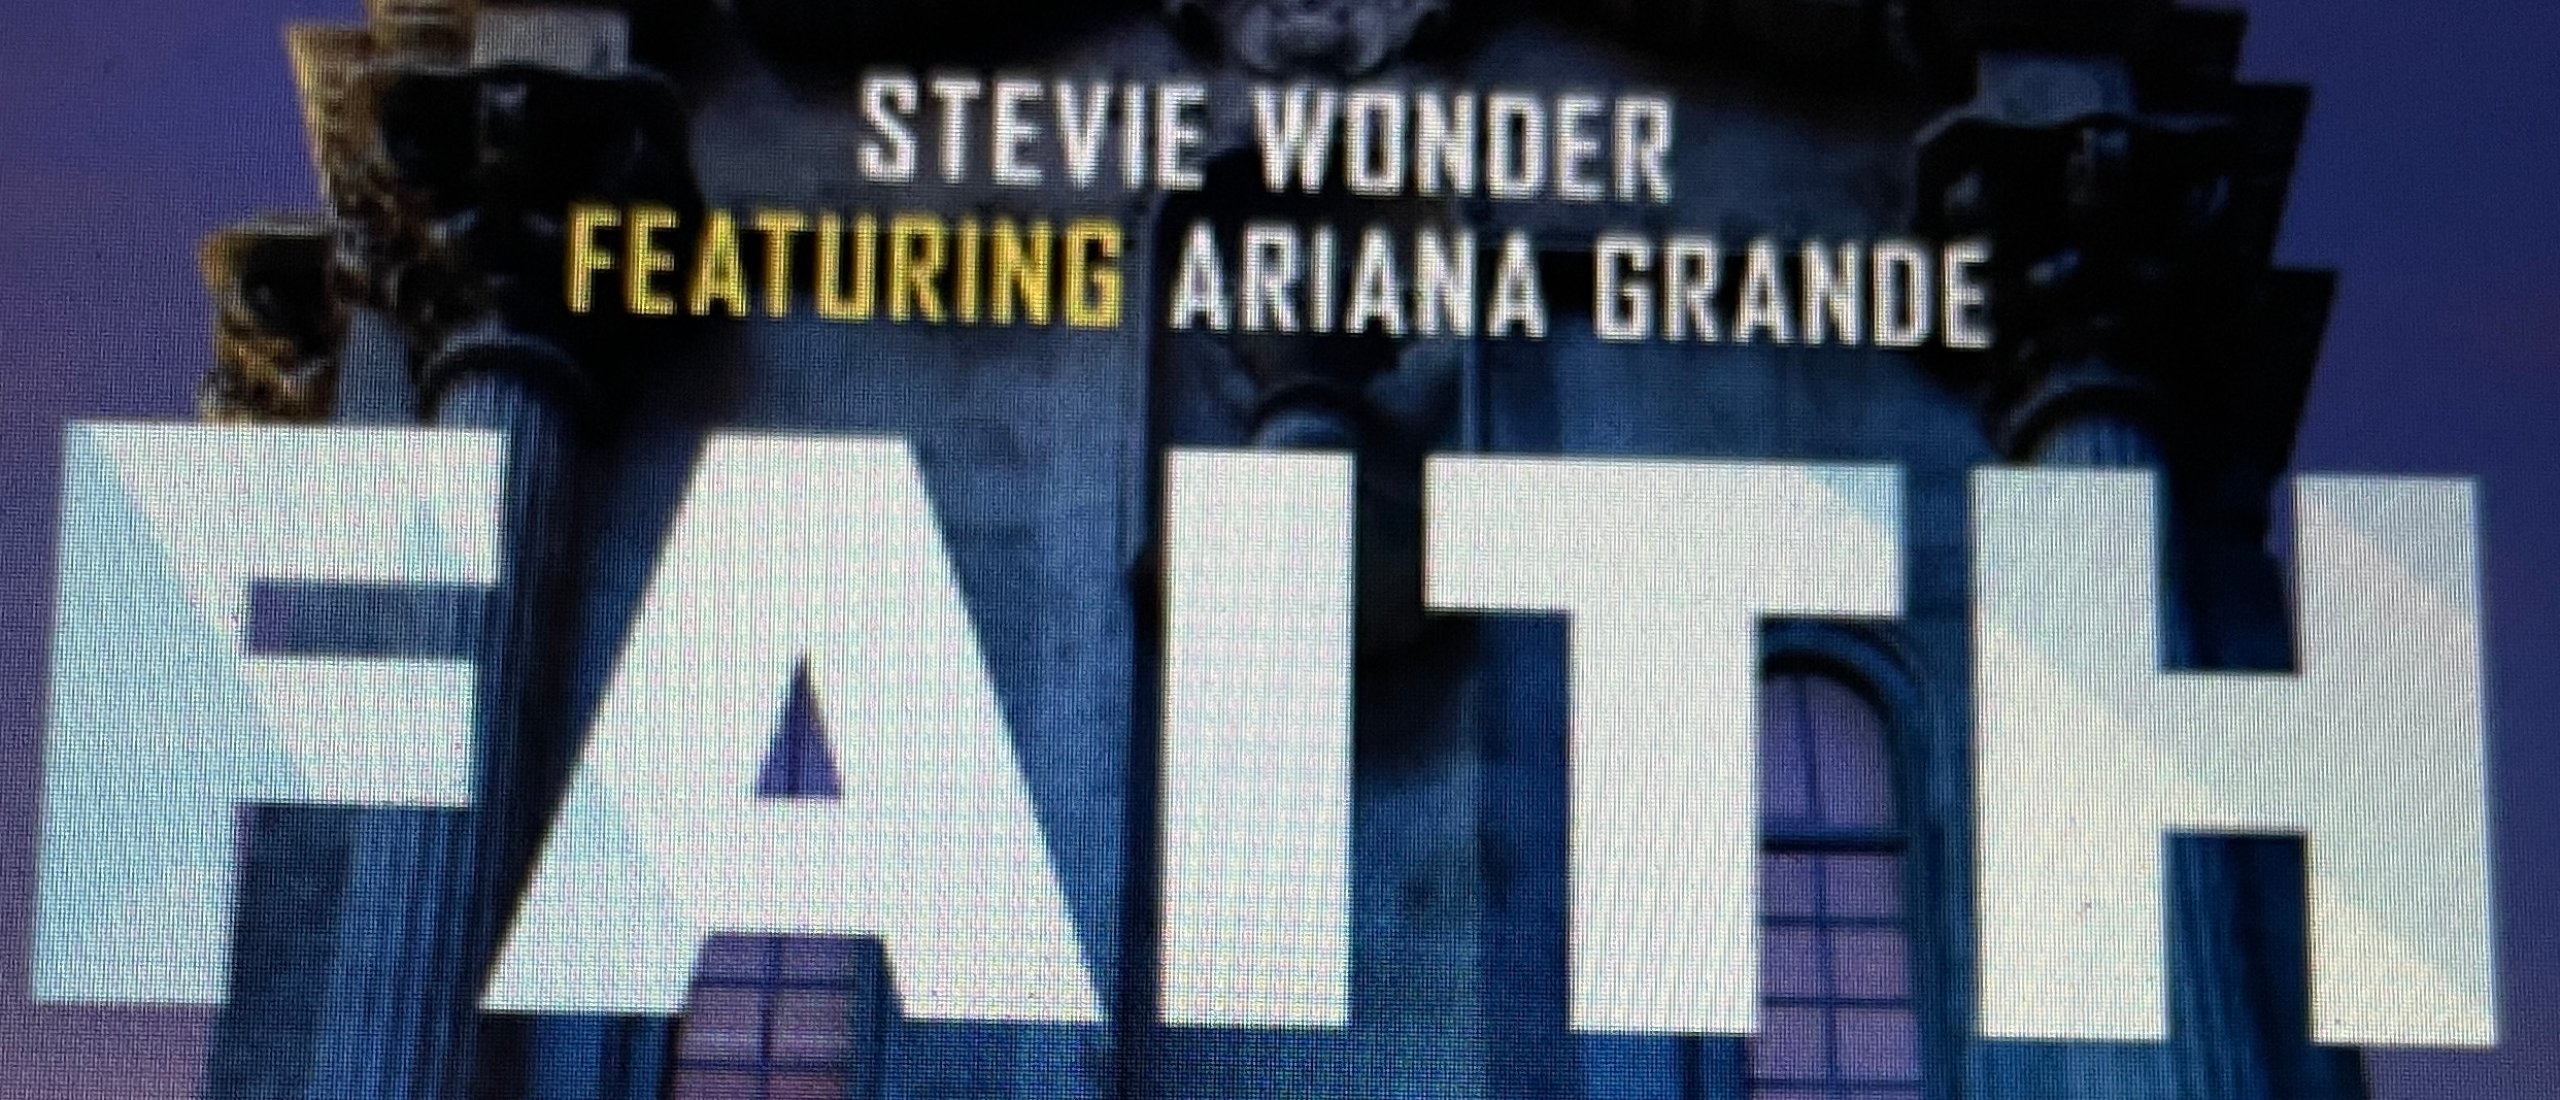 Forgotten Song Friday Stevie Wonder Ariana Grande Faith